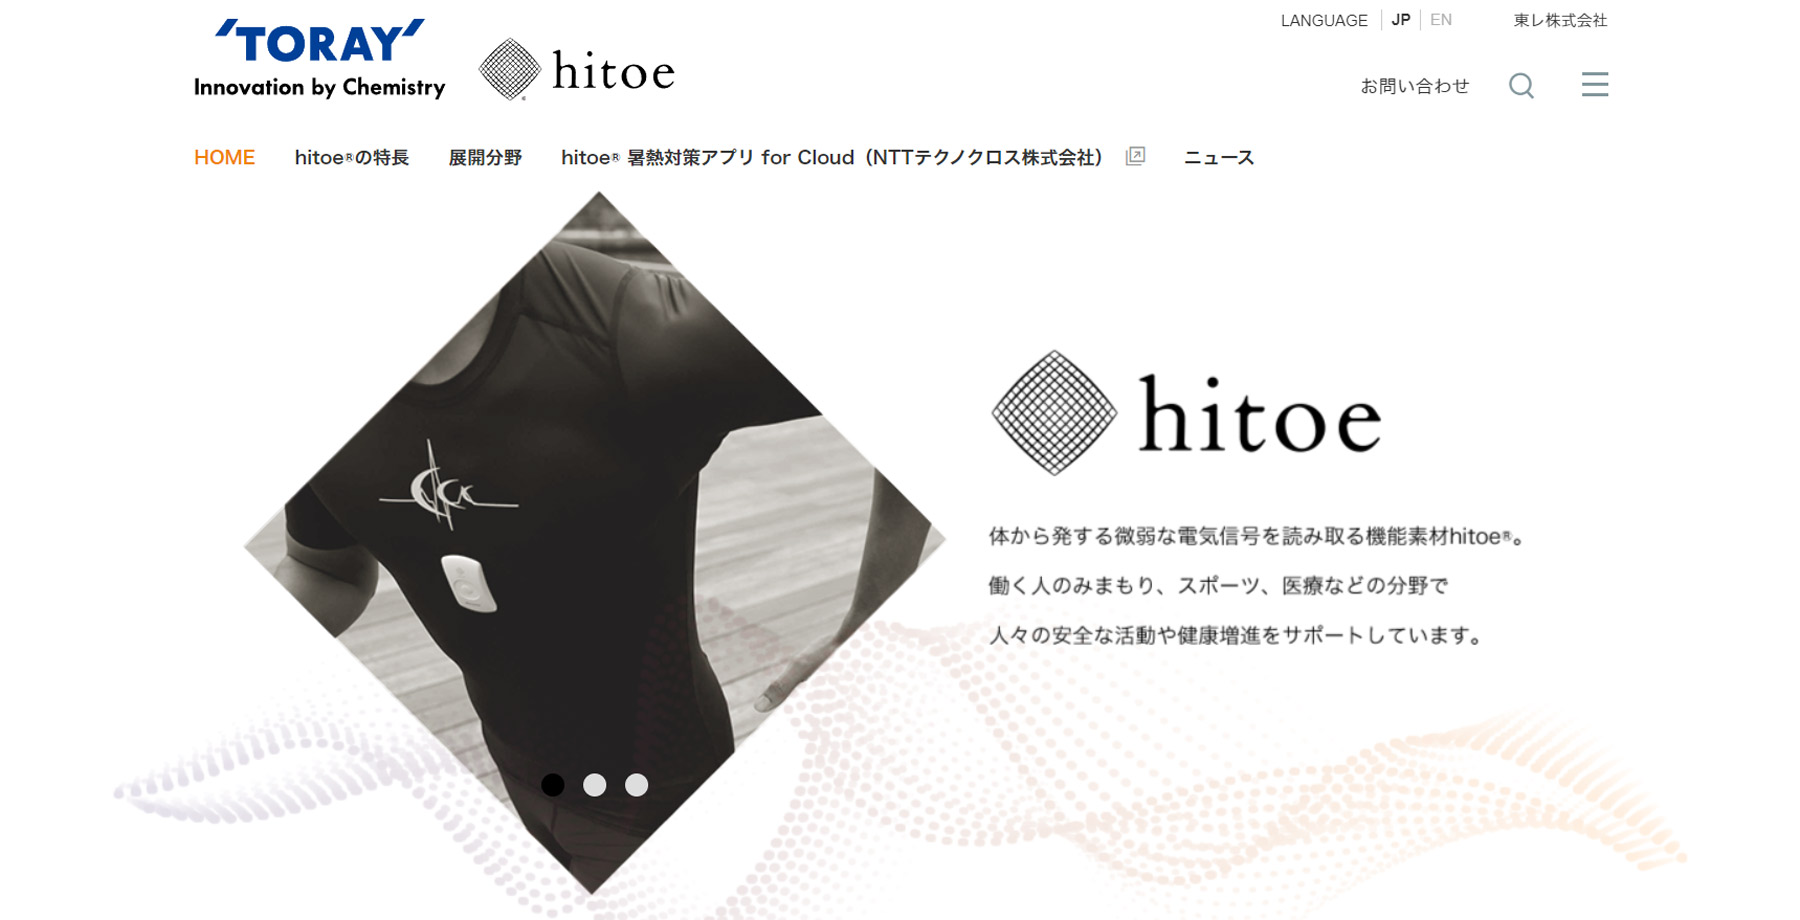 hitoe® 暑熱対策アプリ for Cloud公式Webサイト